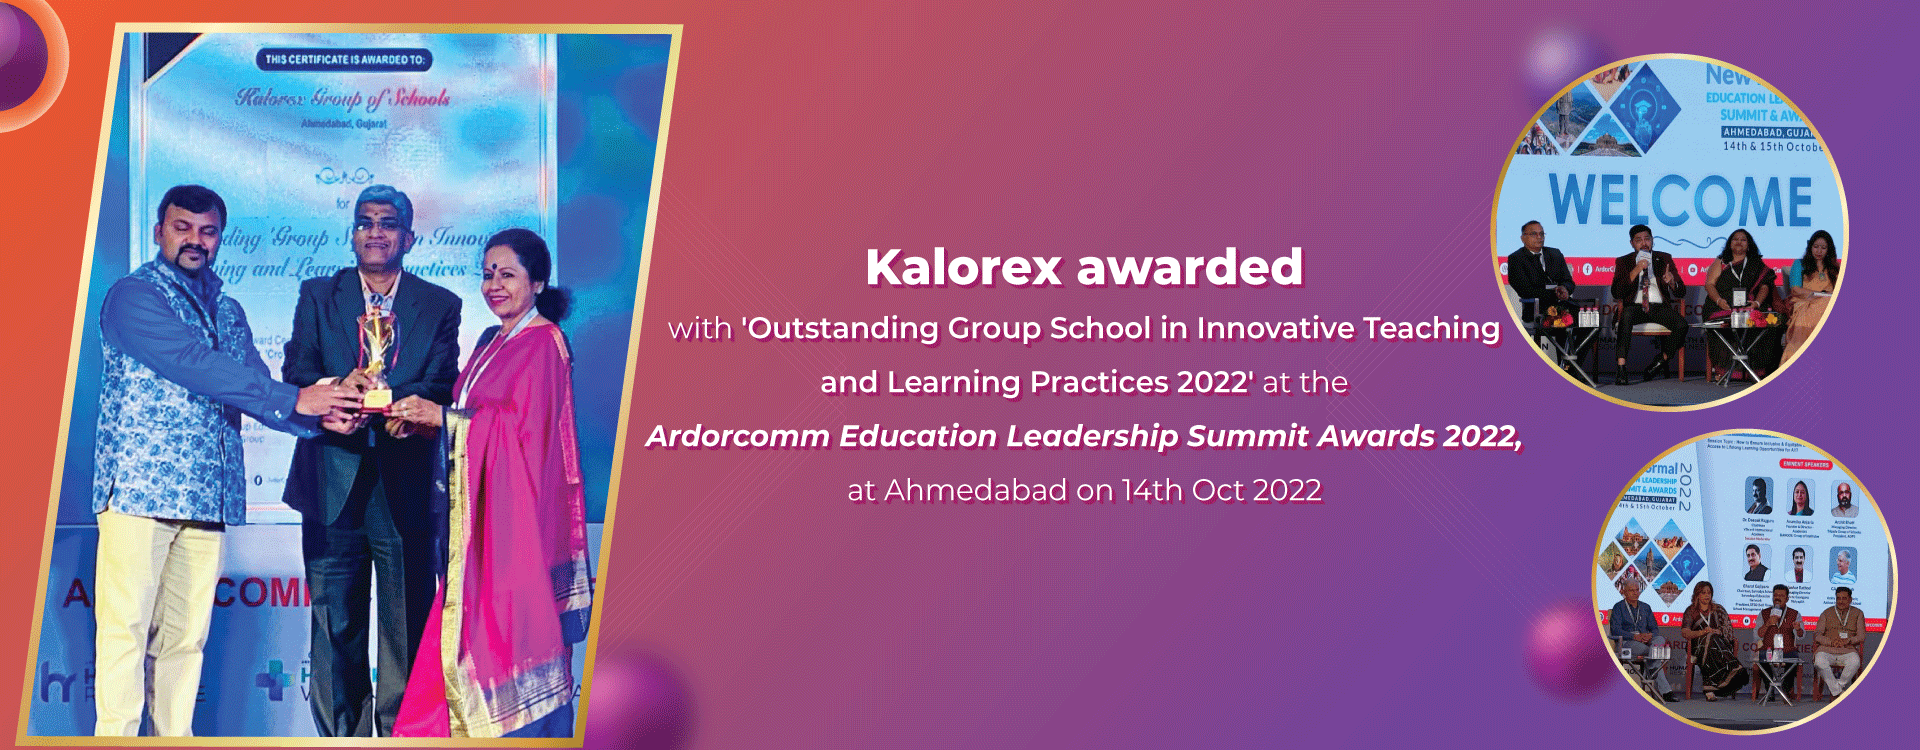 Kalorex-Ardorcomm_Web-Banner_2022